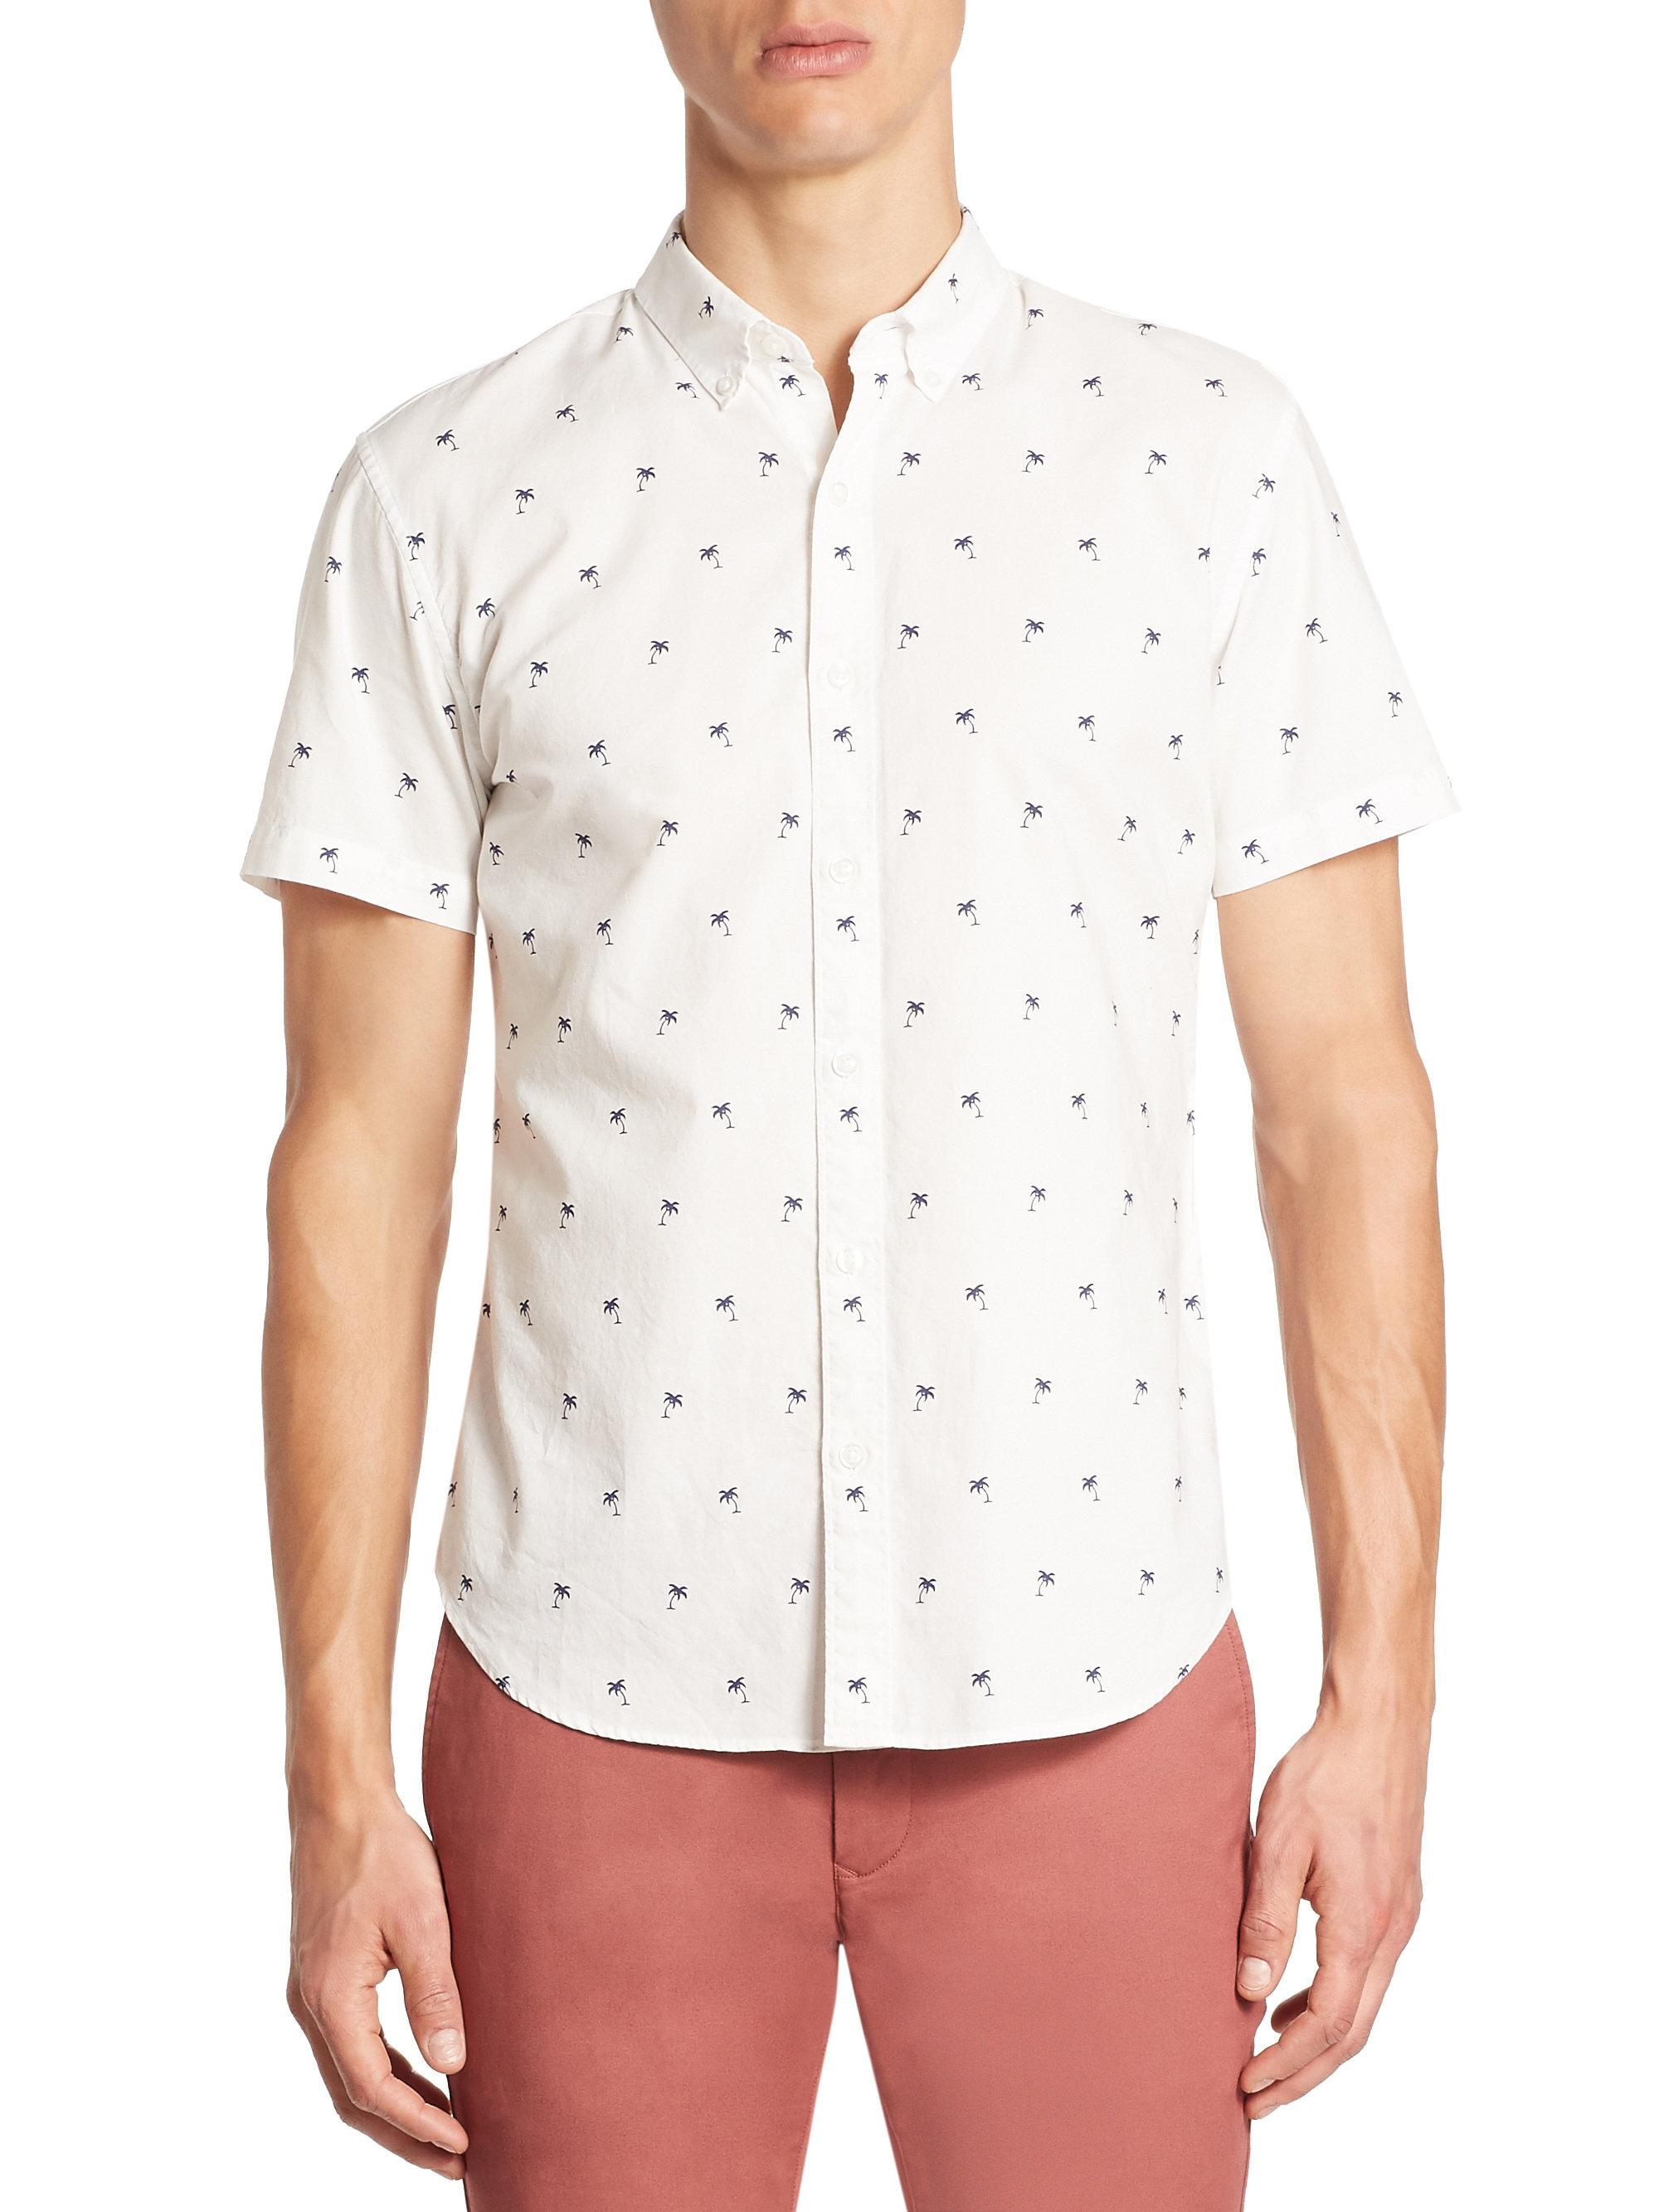 Lyst - Bonobos Palm-print Slim-fit Shirt in White for Men